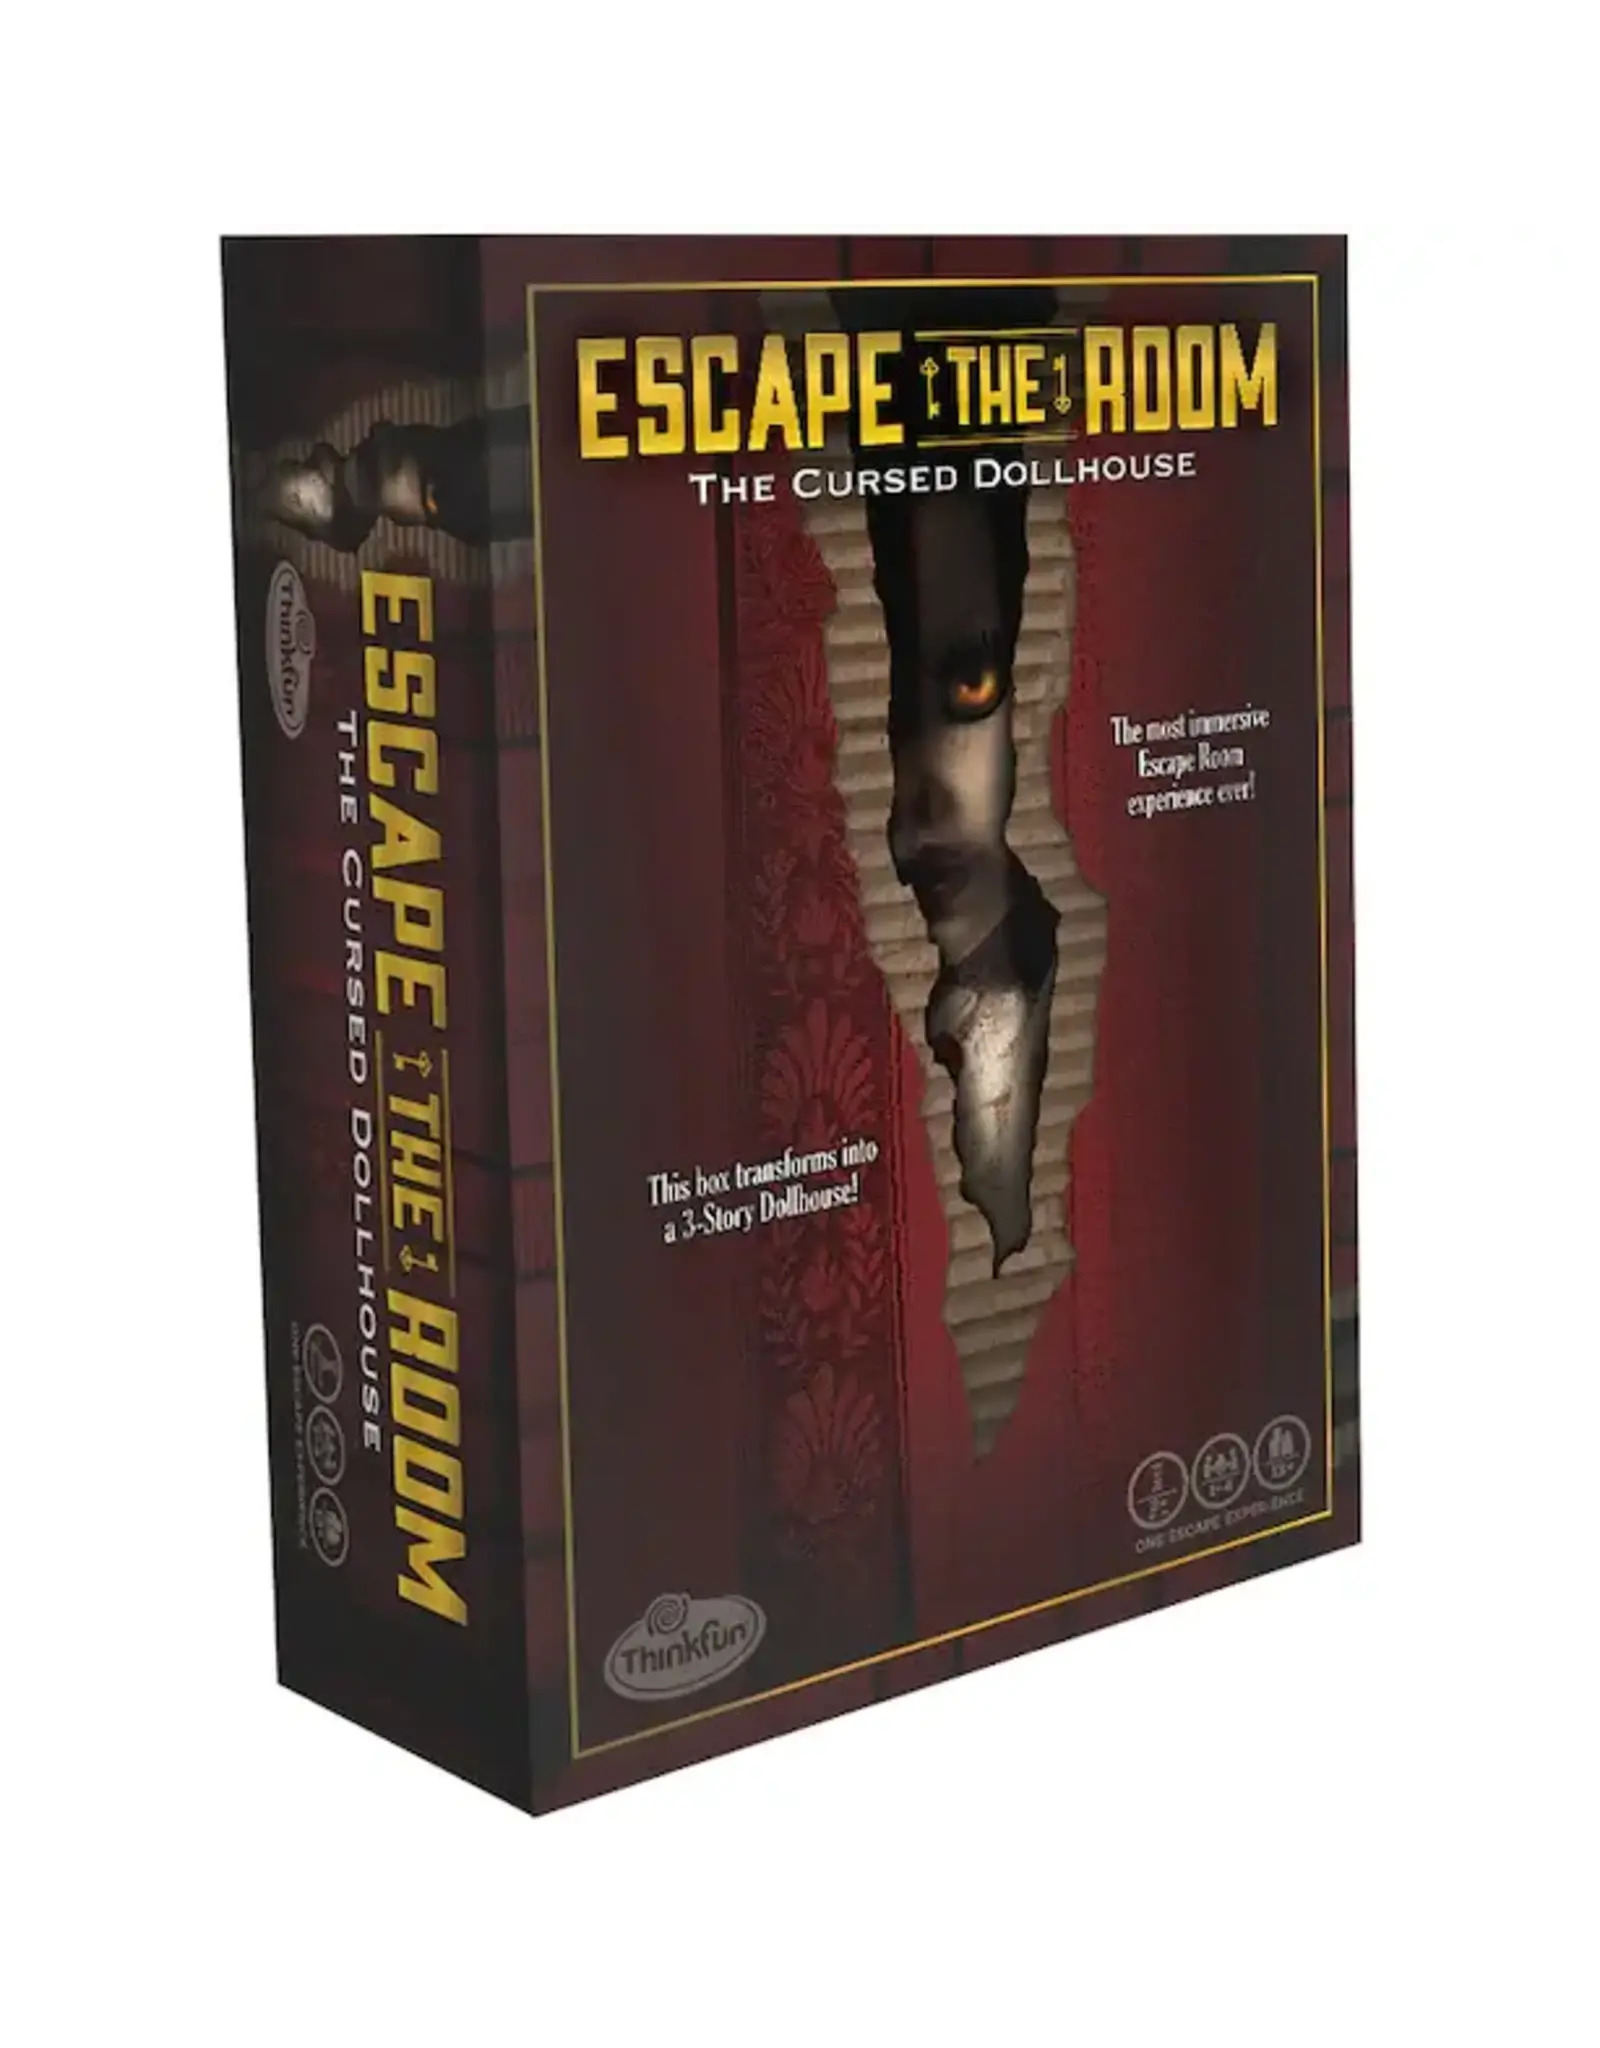 Think Fun Escape the Room - Cursed Dollhouse